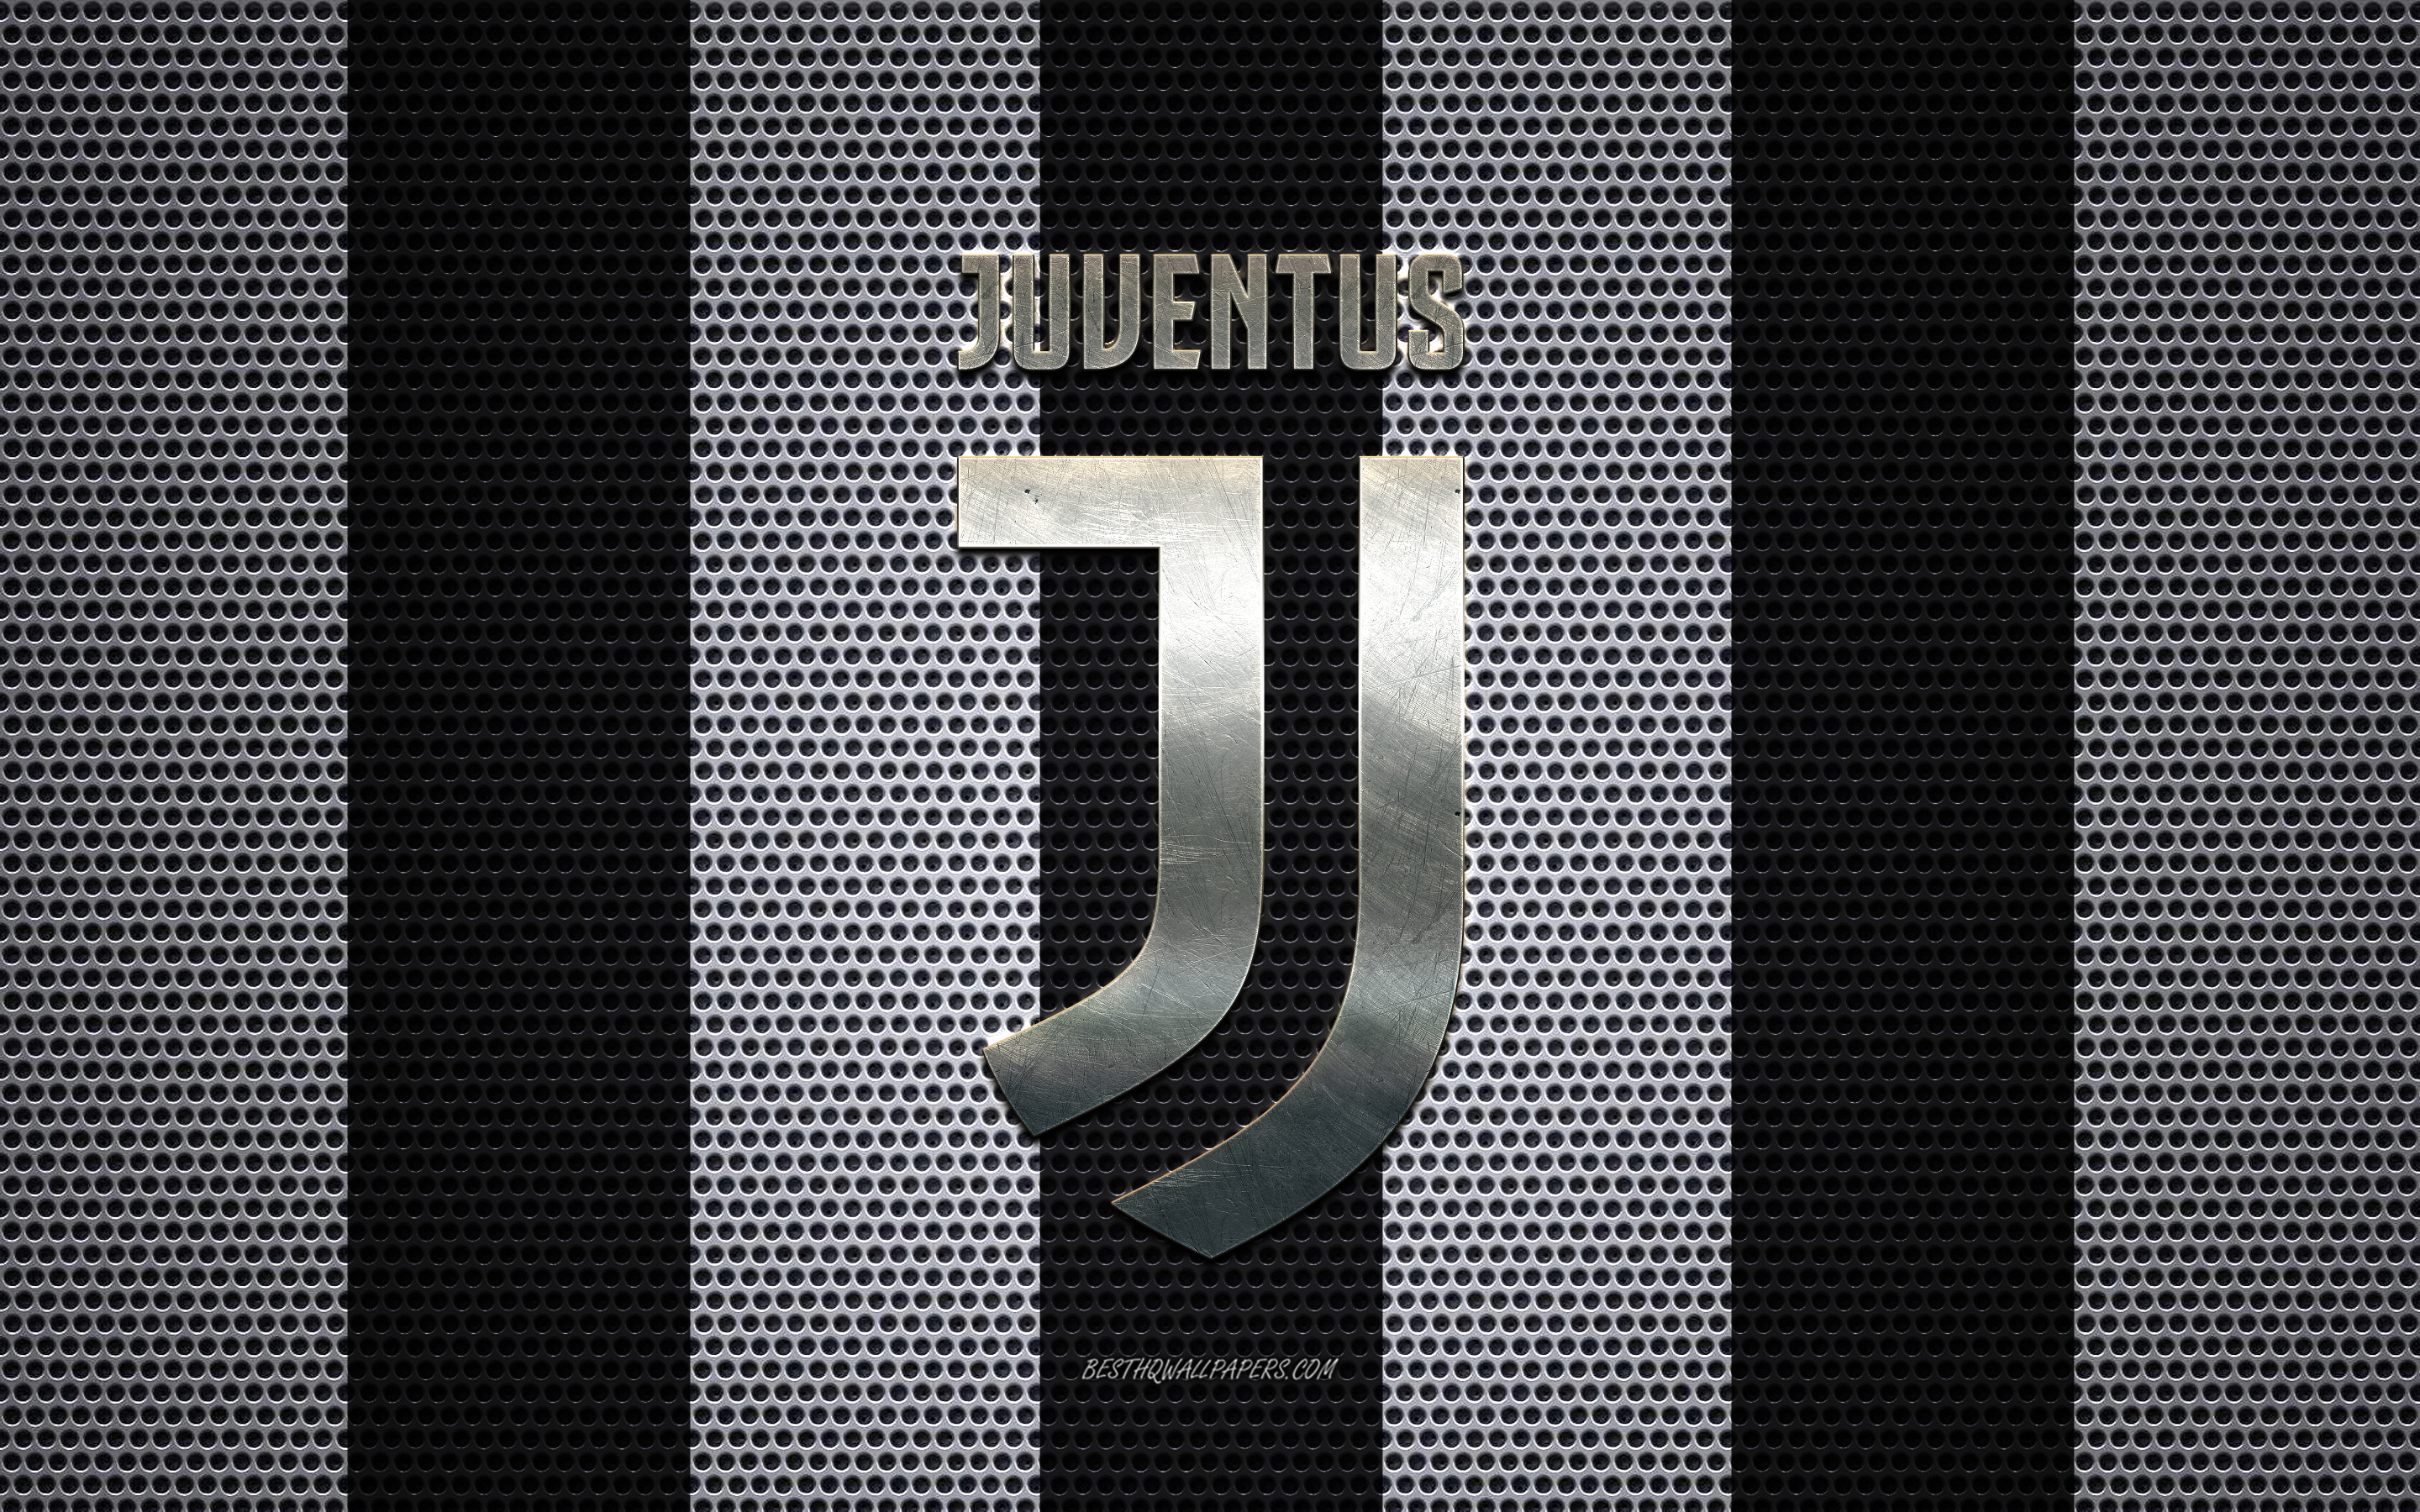 Cristiano Ronaldo Juventus iPhone Wallpapers Free Download